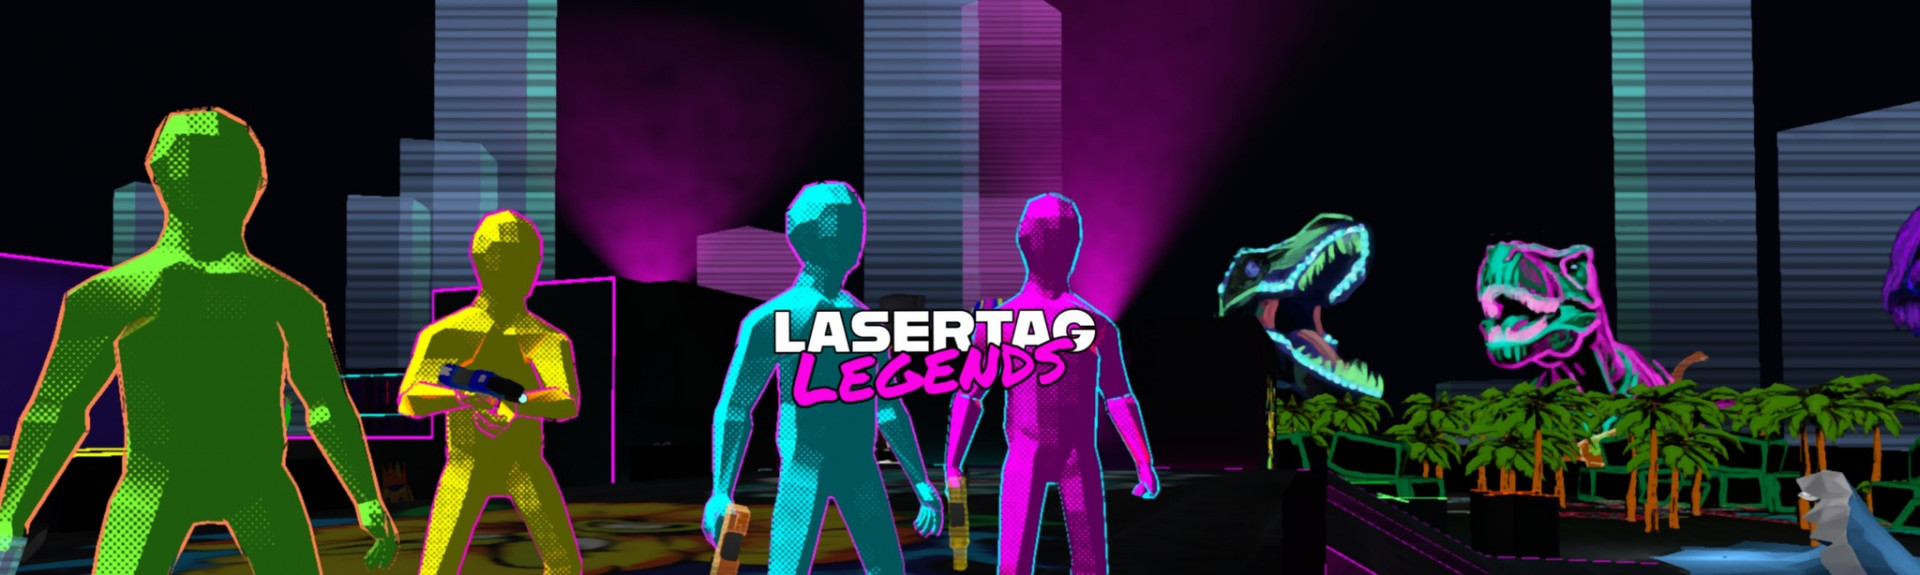 Lasertag Legends